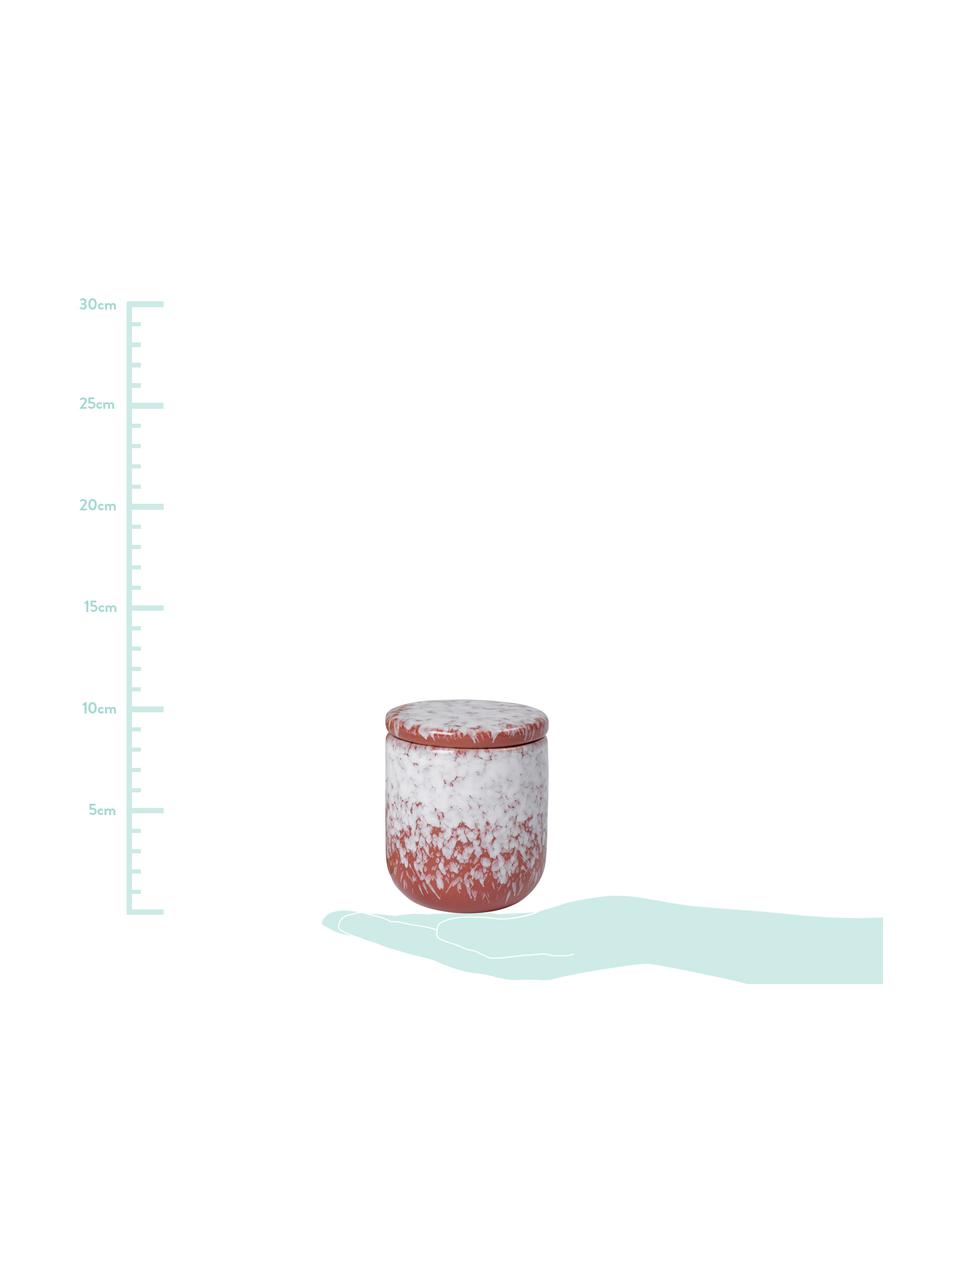 Duftkerze Maple Walnut, Behälter: Keramik, Rot, Weiß, Ø 8 x H 9 cm